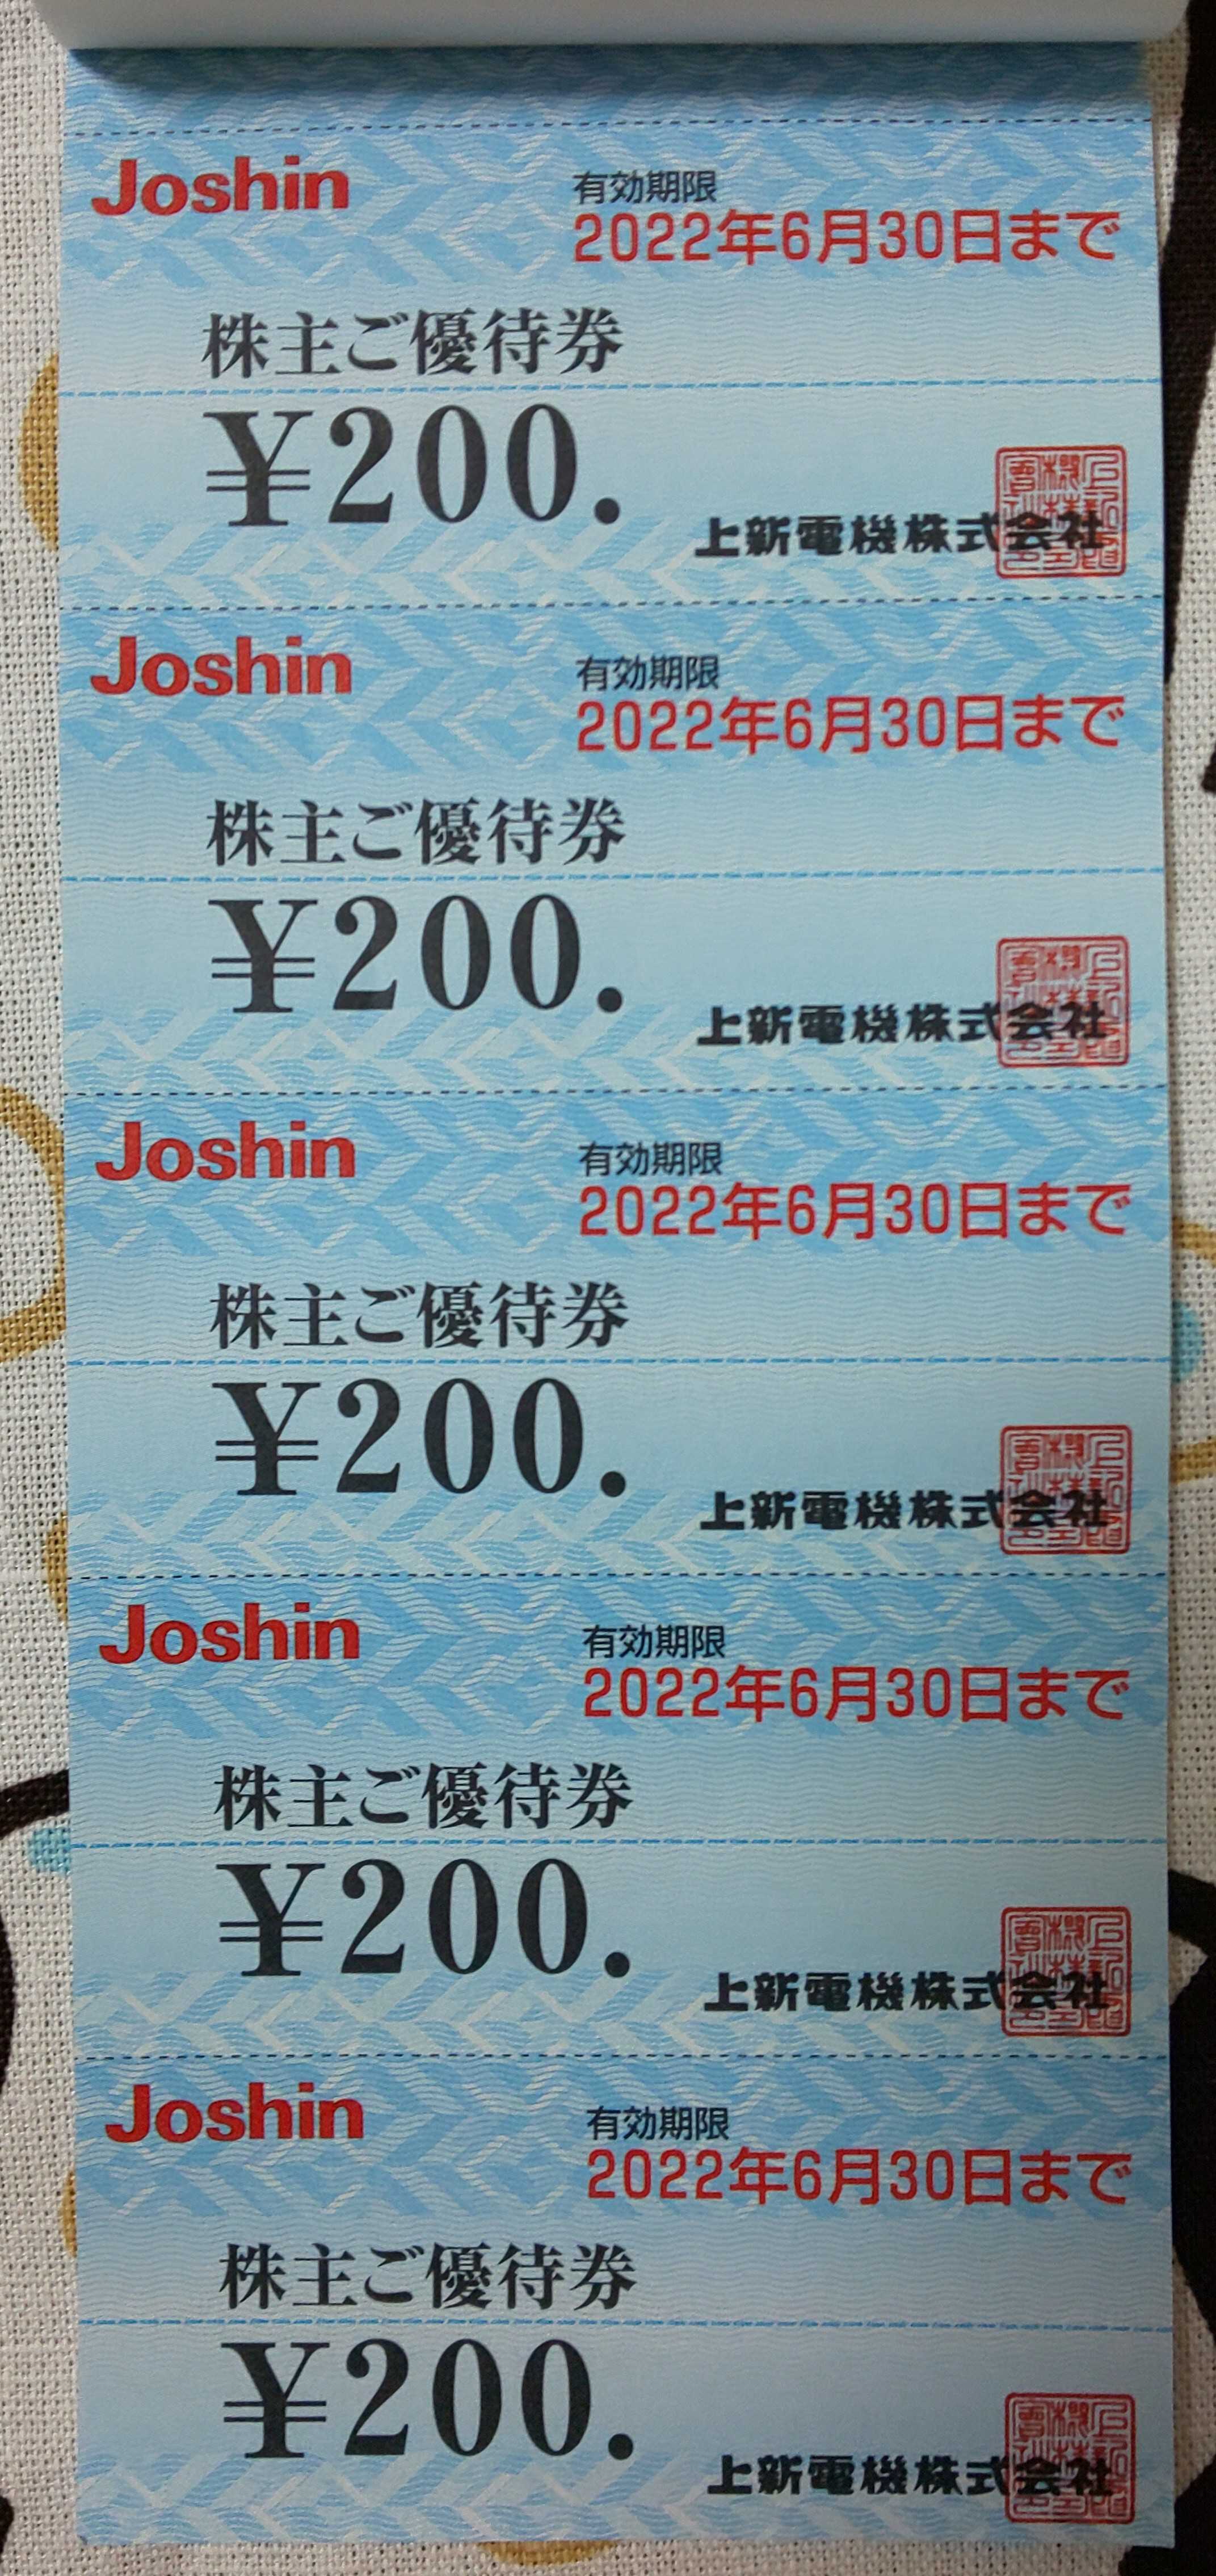 joshinから 優待券5000円分 | うさこの株主優待と株主総会日記 - 楽天